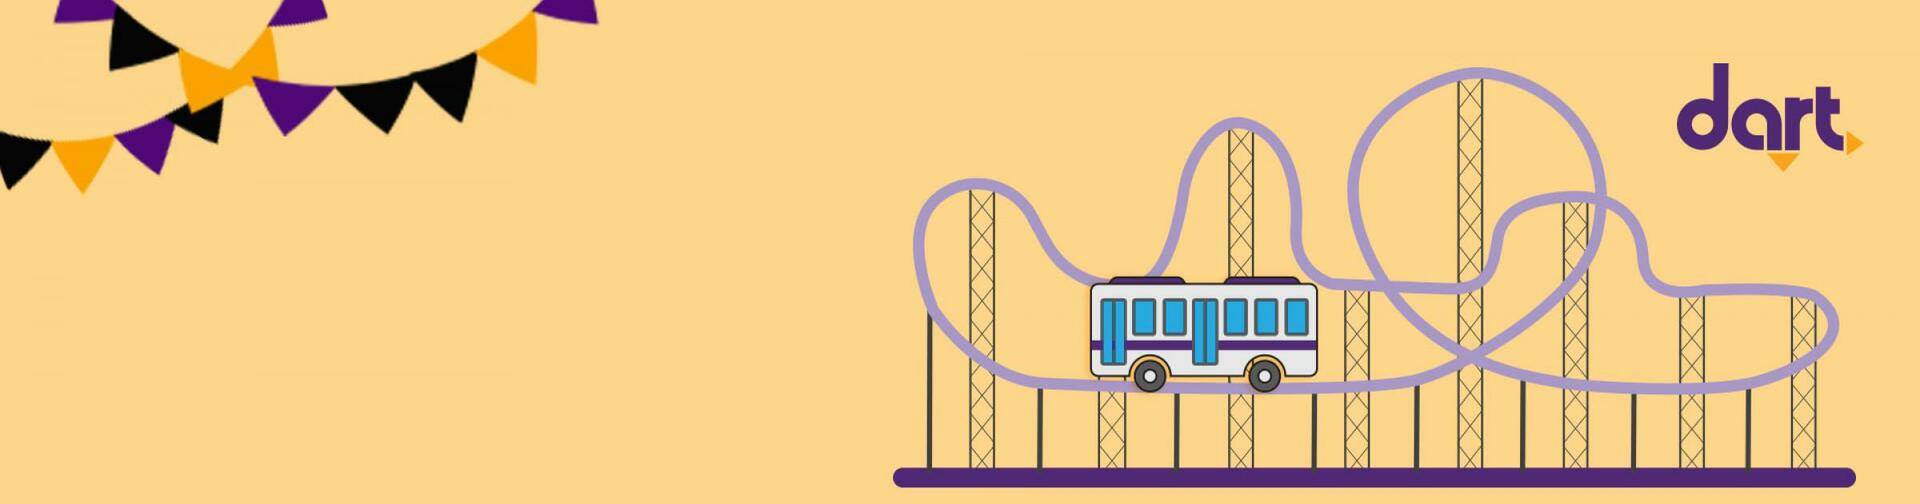 Cartoon Bus on Roller Coaster Track